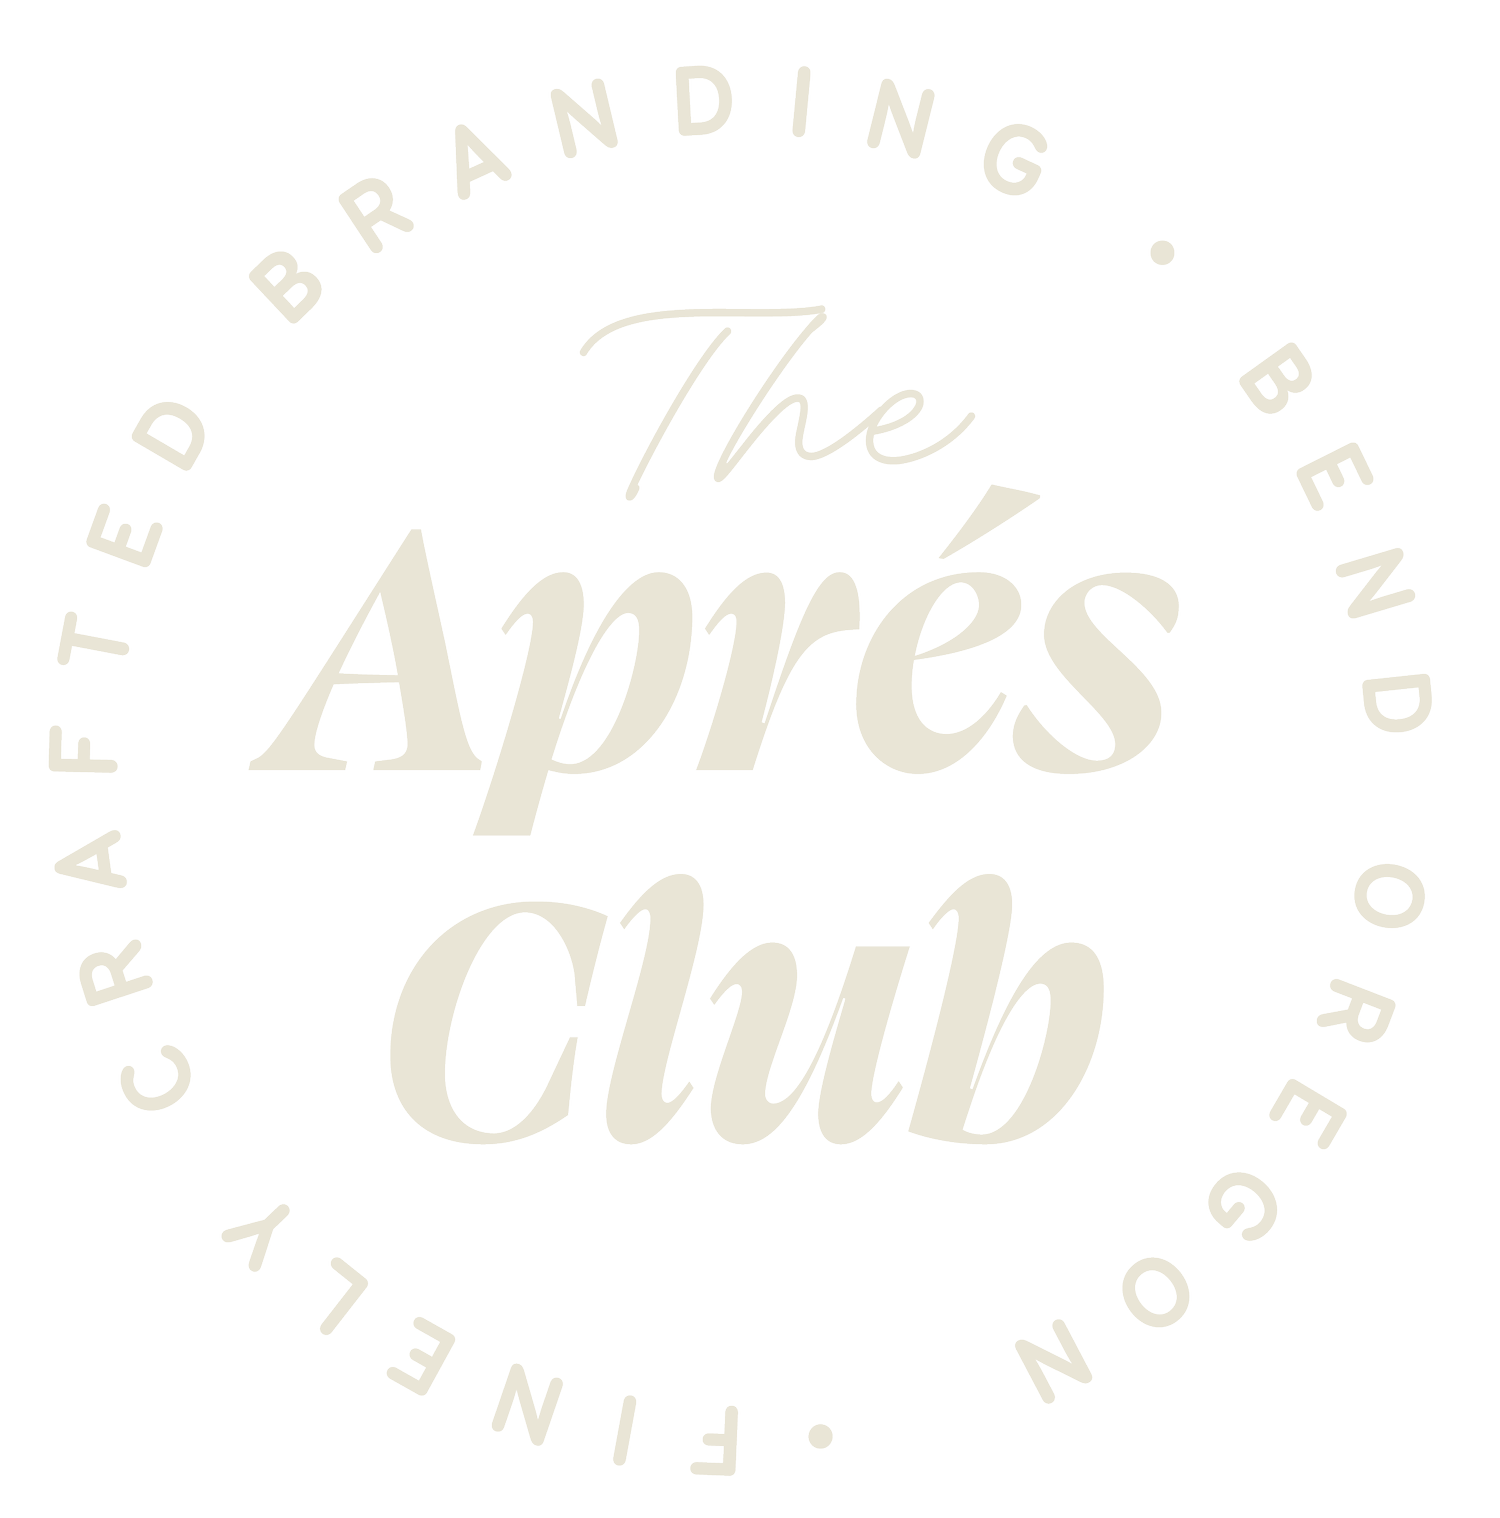 The Après Club